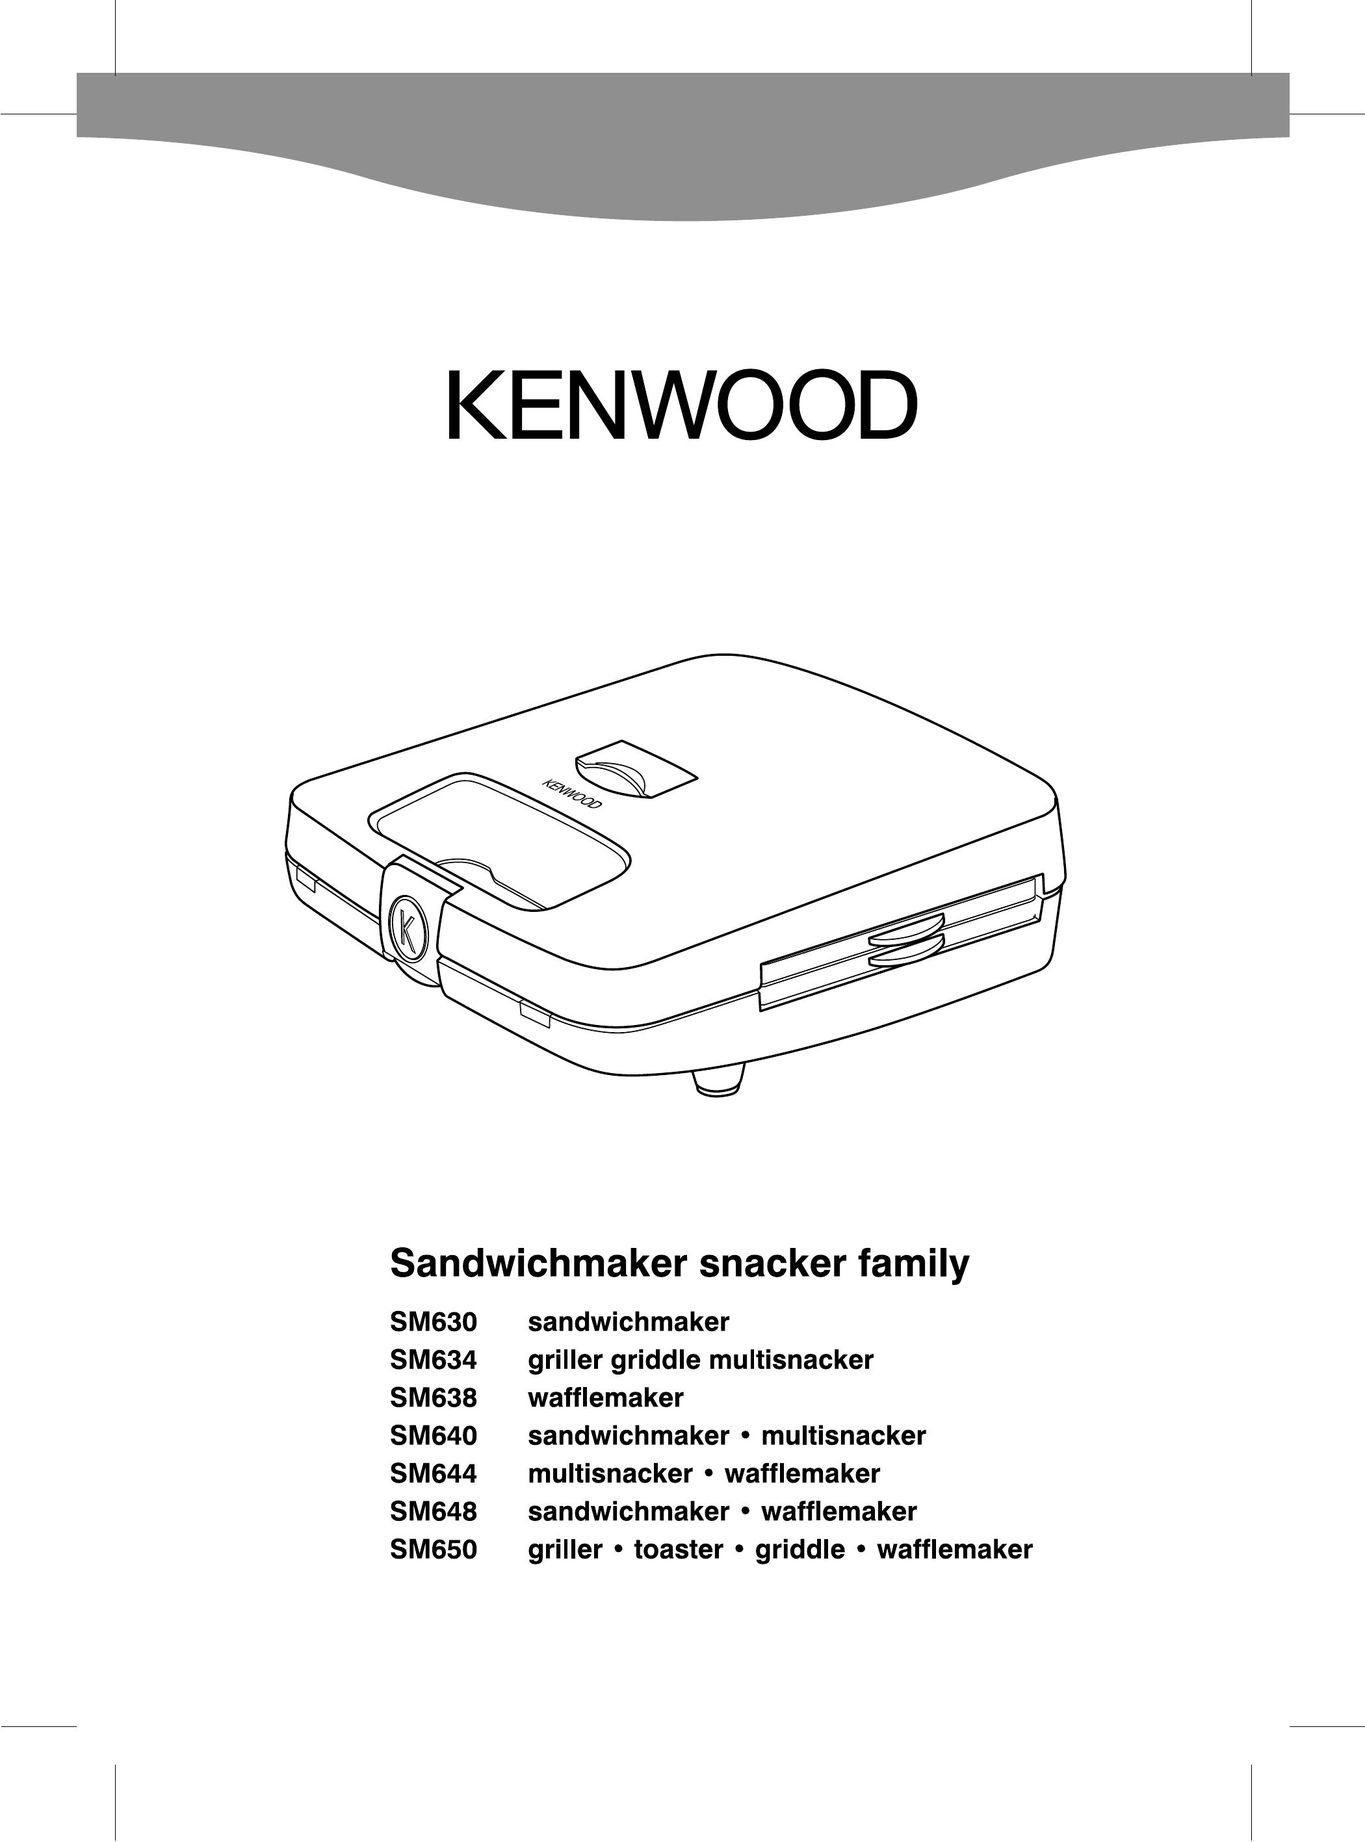 Kenwood SM648 Kitchen Grill User Manual